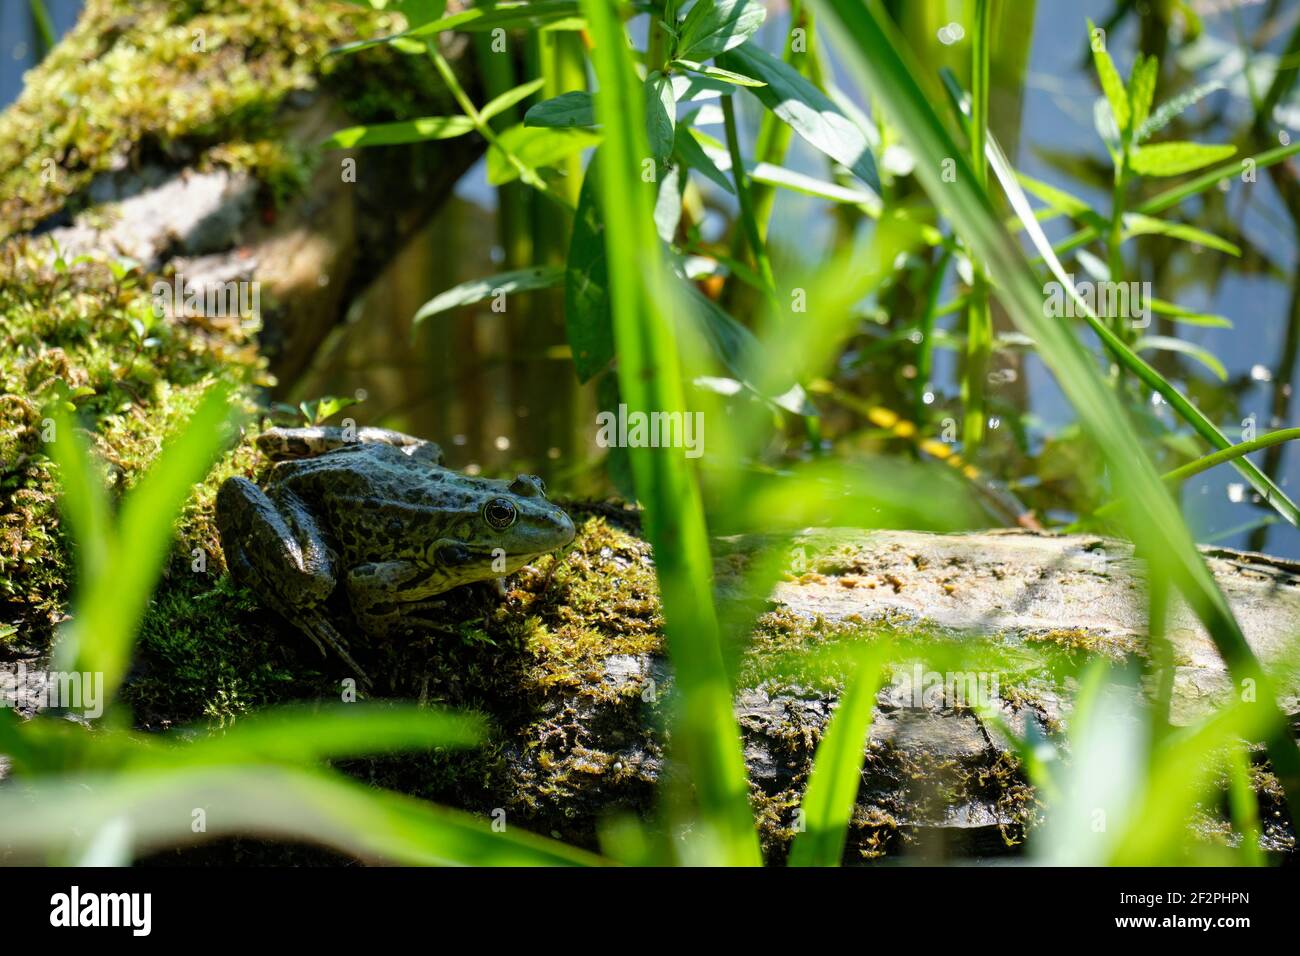 Pond frog, Pelophylax esculentus, Rana esculenta, water frog Stock Photo